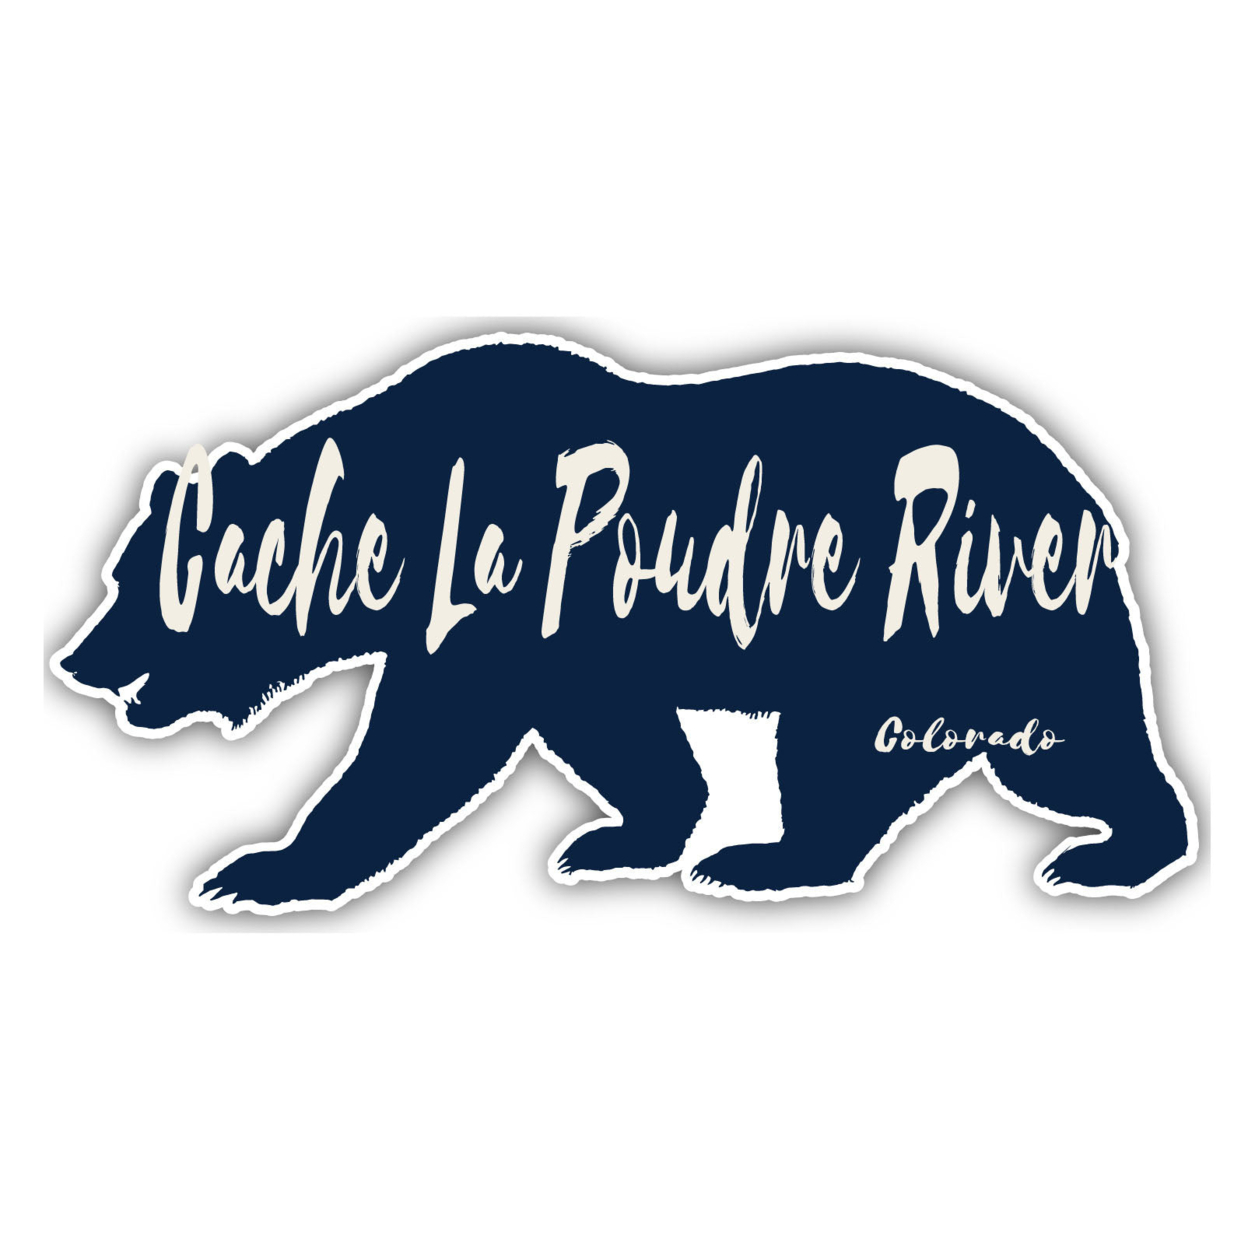 Cache La Poudre River Colorado Souvenir Decorative Stickers (Choose Theme And Size) - Single Unit, 4-Inch, Camp Life